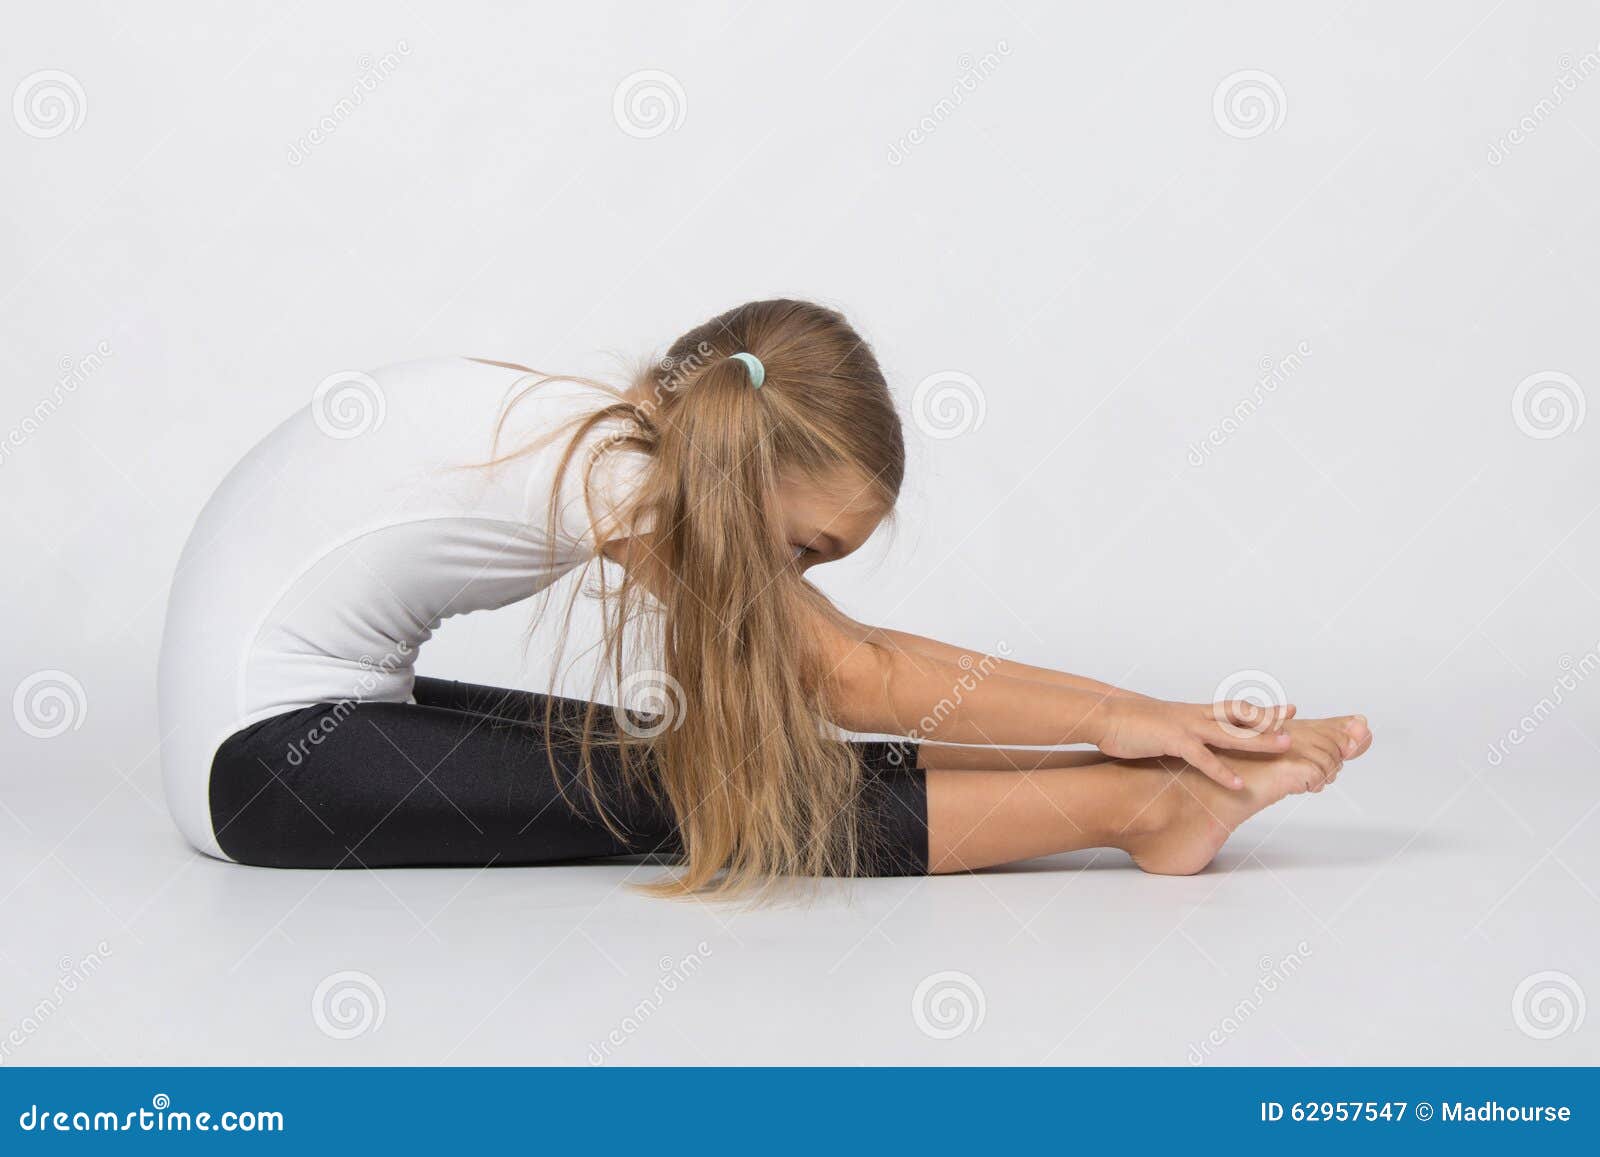 Дотянуться до пола. Девочка гимнастка на полу. Гимнастка сидит на полу. Девочка гимнастка сидит на полу. Гимнастки сидят на коленках.